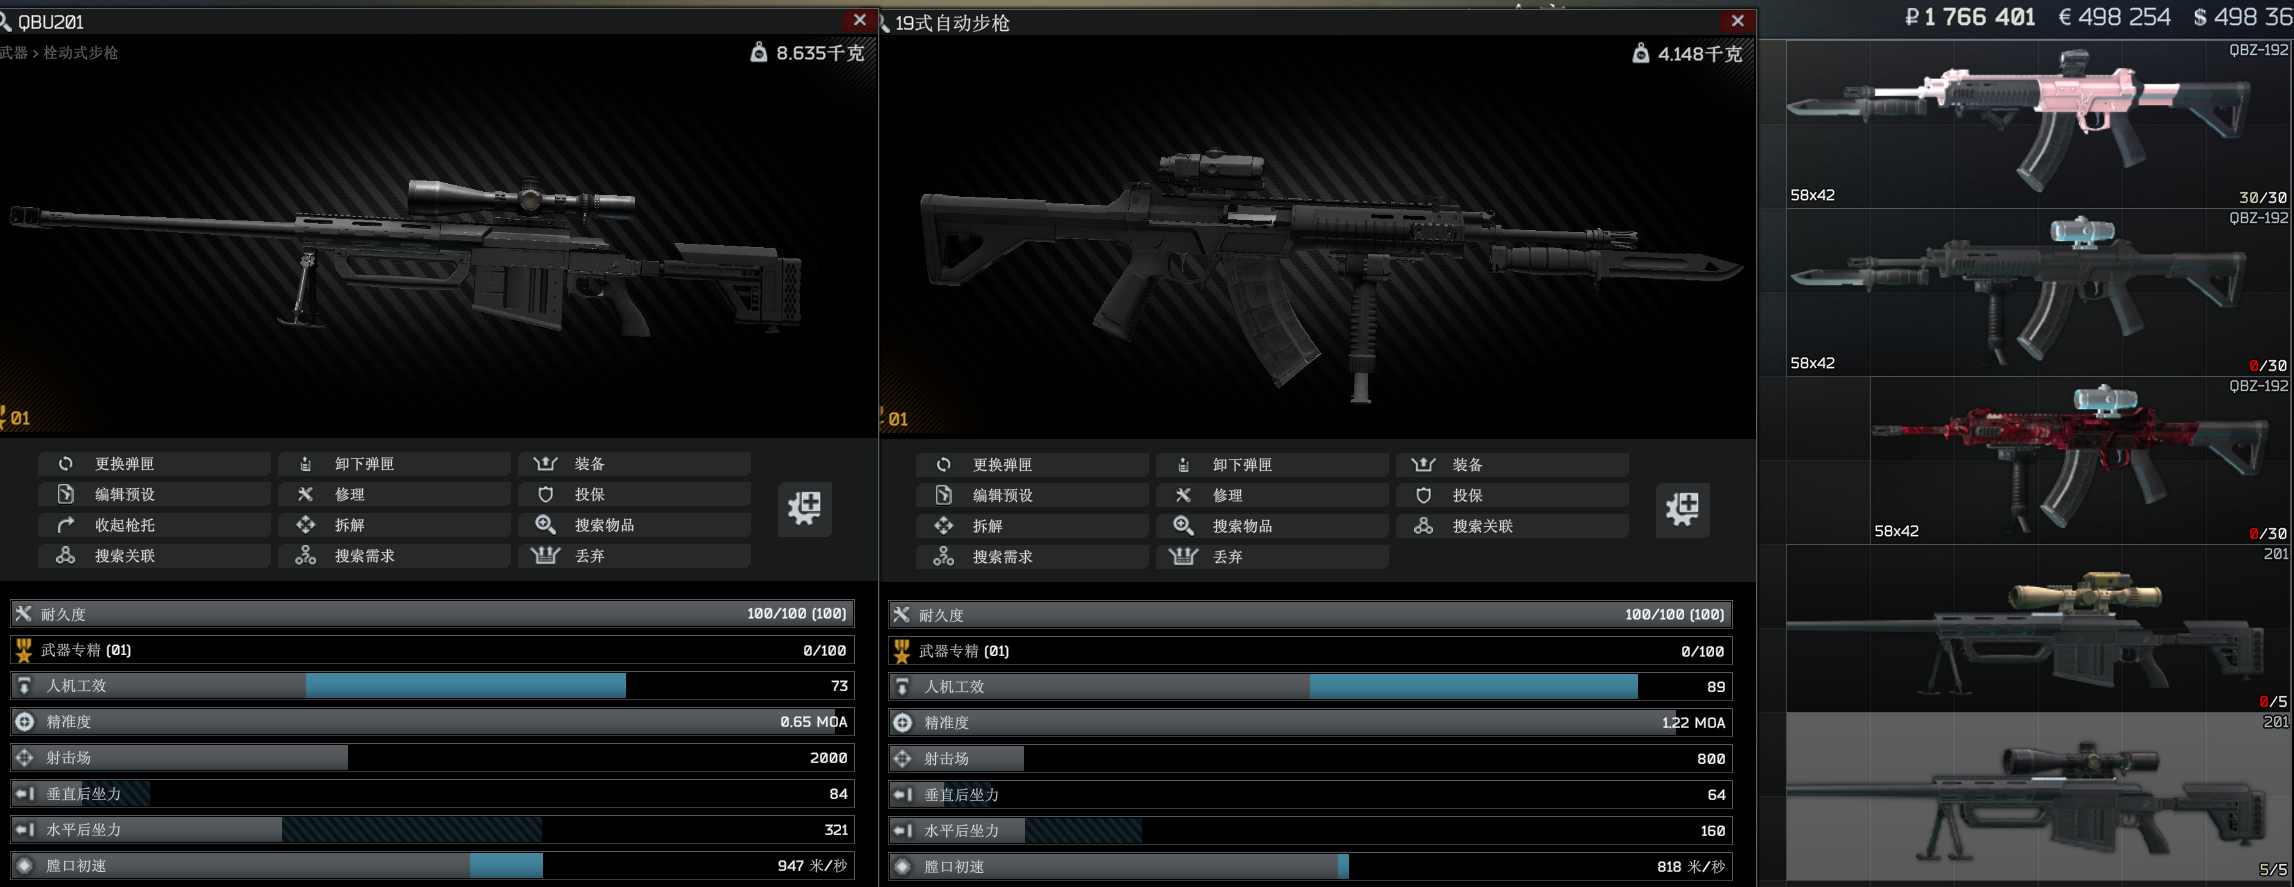 【SPT-AKI 3.5.2 】【AT&萱苏 联合制作】QBU201狙击步枪&QBZ191自动步枪